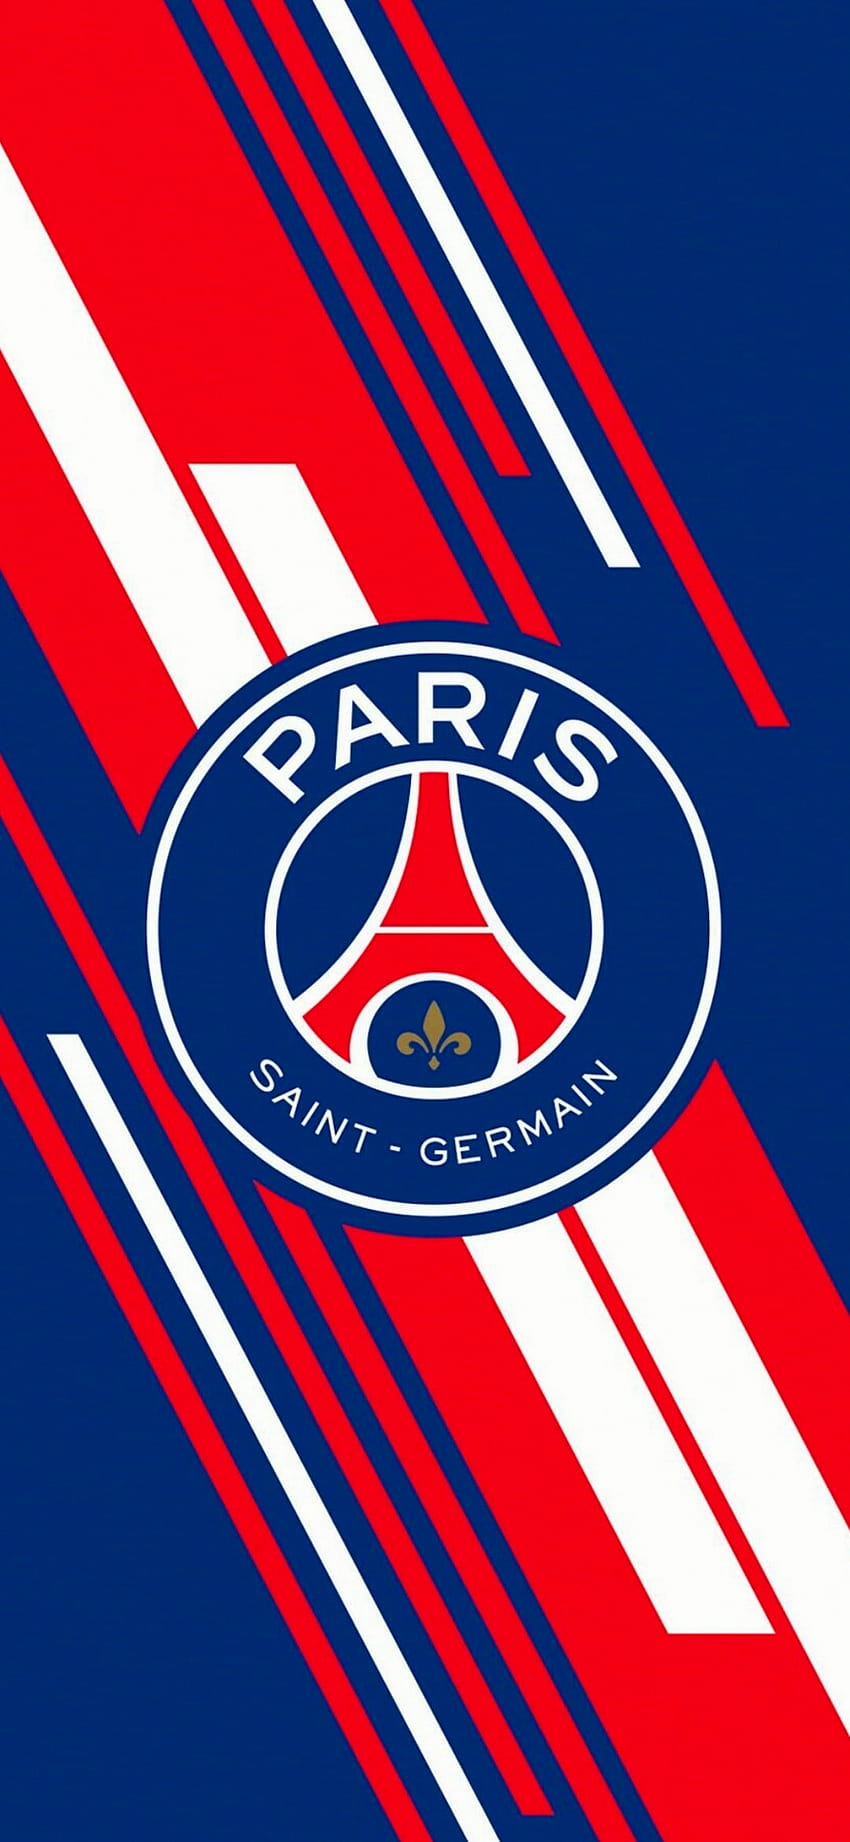 60 Paris SaintGermain FC HD Wallpapers and Backgrounds